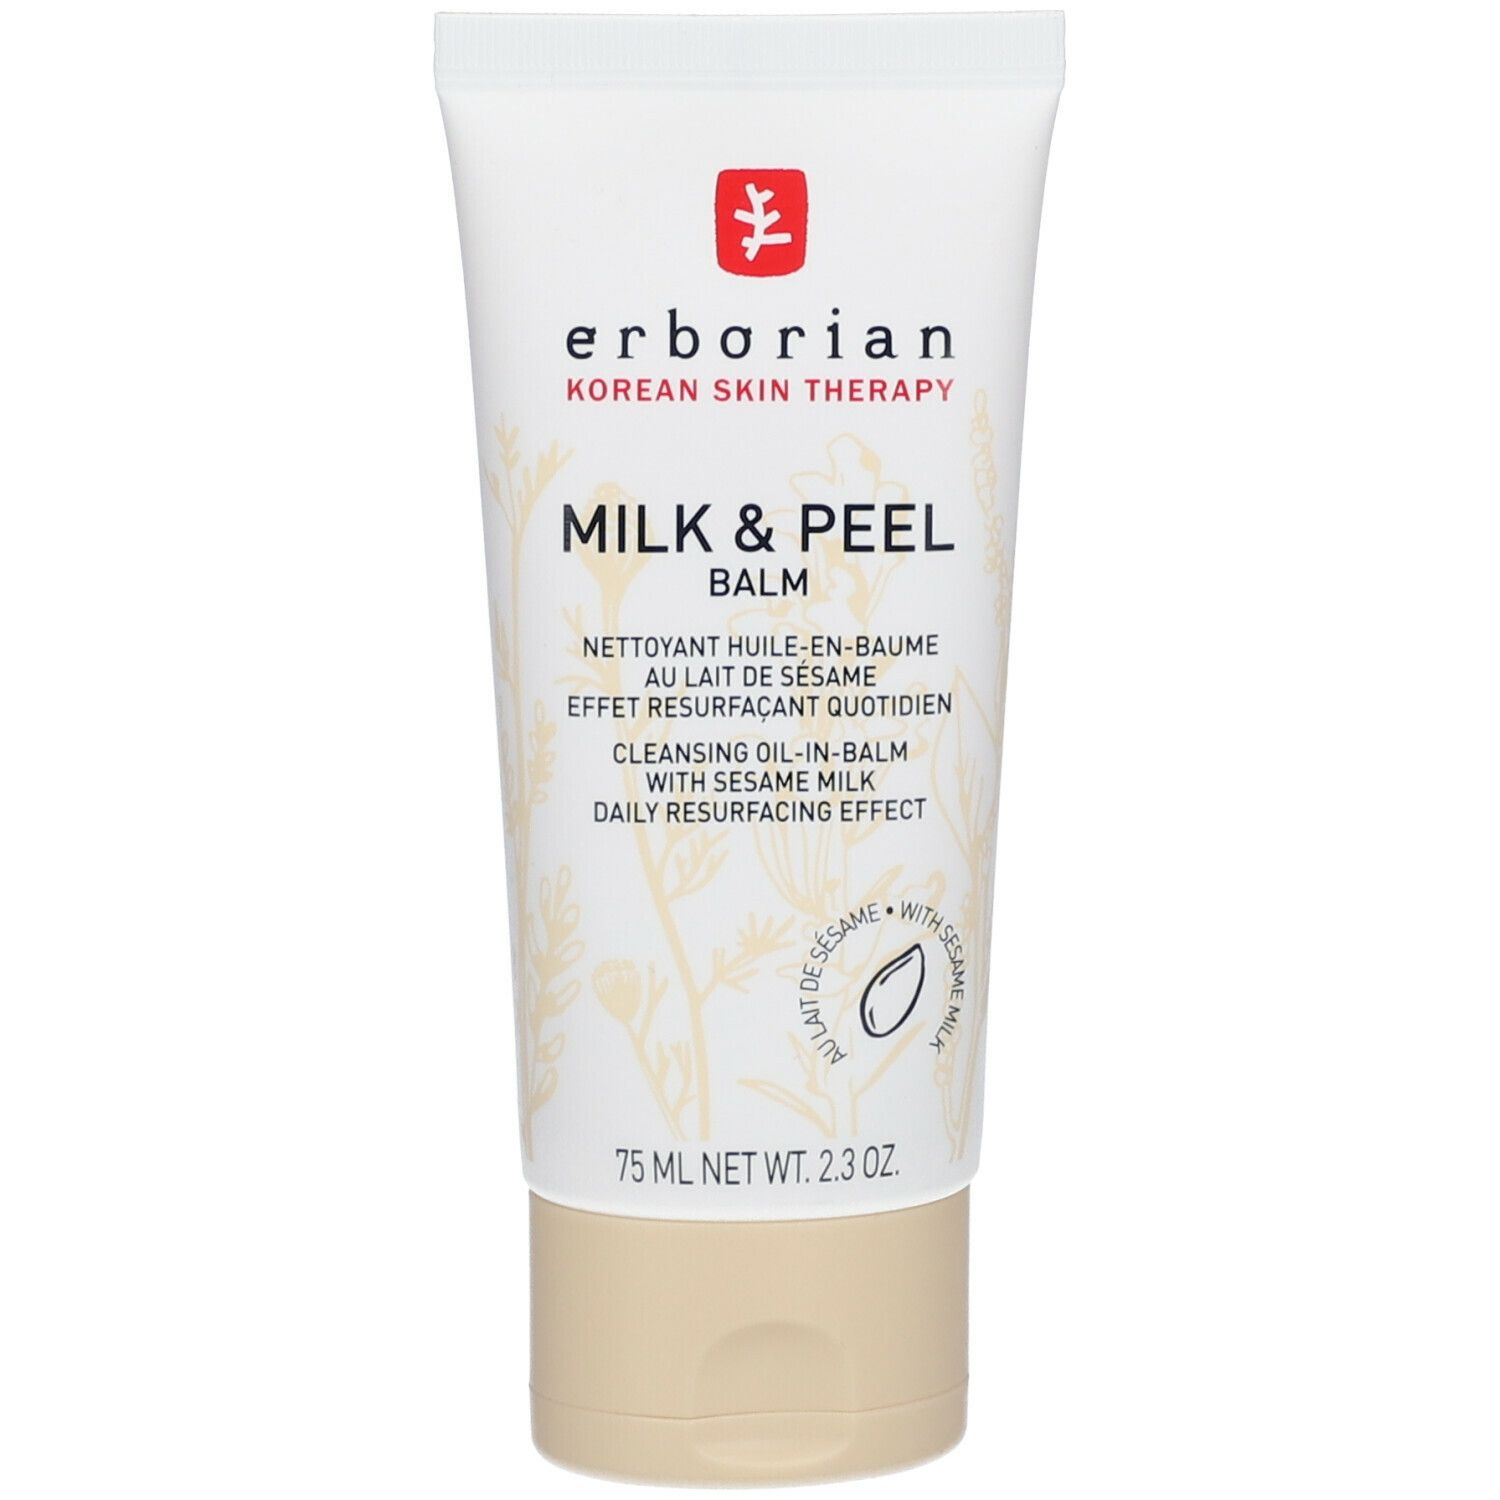 Erborian Korean Skin Therapy Paris Seoul Milk & Peel Balm - Milk Resurfacing Balm